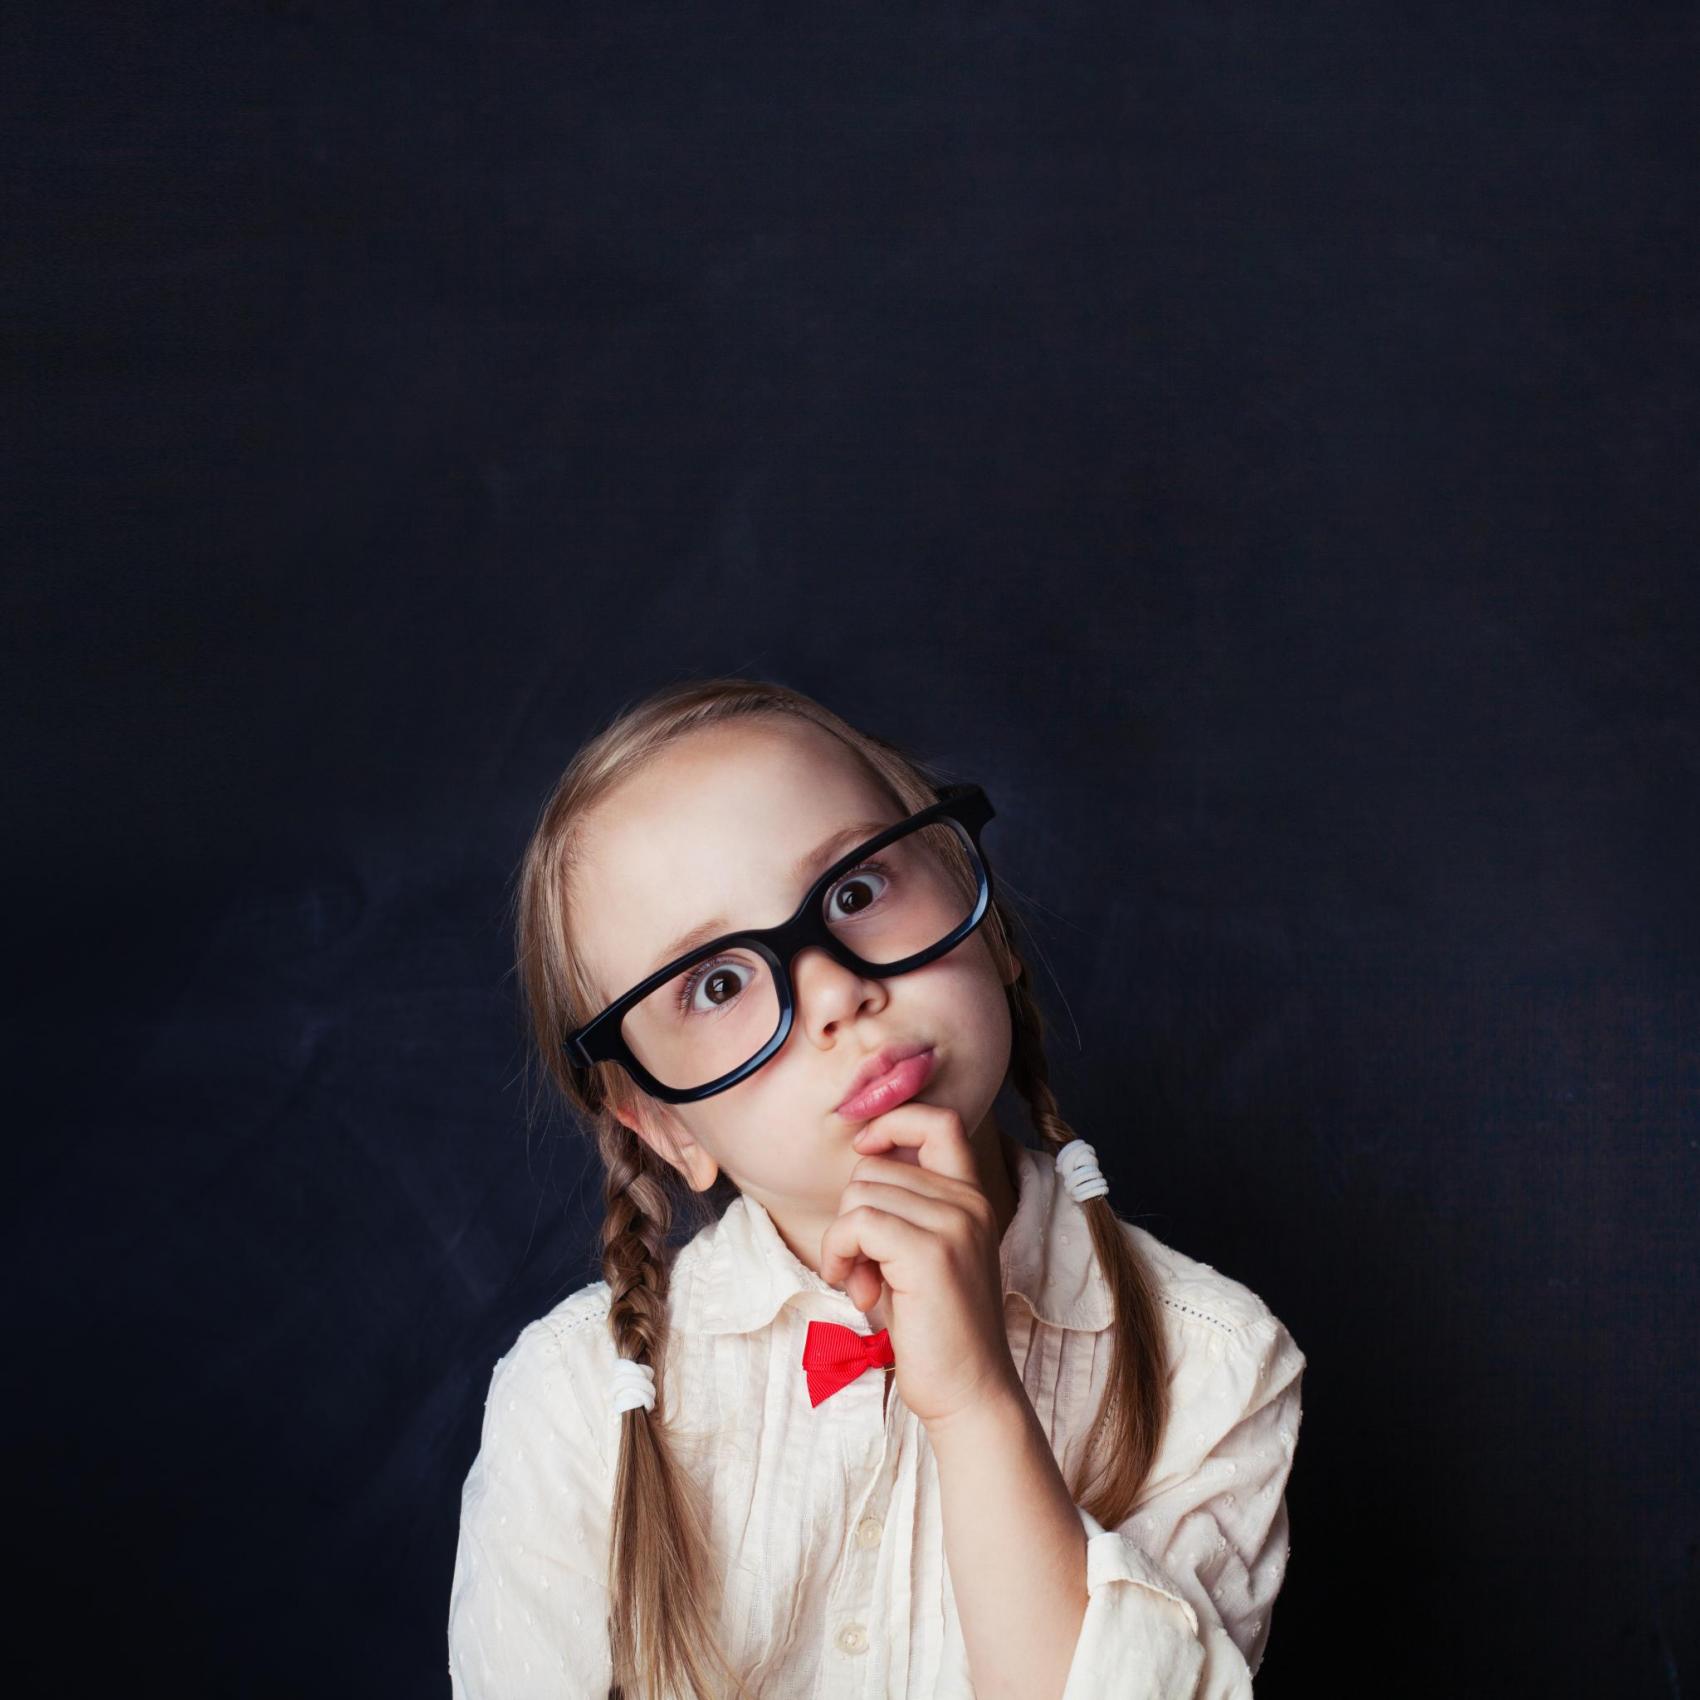 https://www.shutterstock.com/de/image-photo/smart-child-thinking-little-girl-glasses-1142033714©MillaF/Shutterstock.com